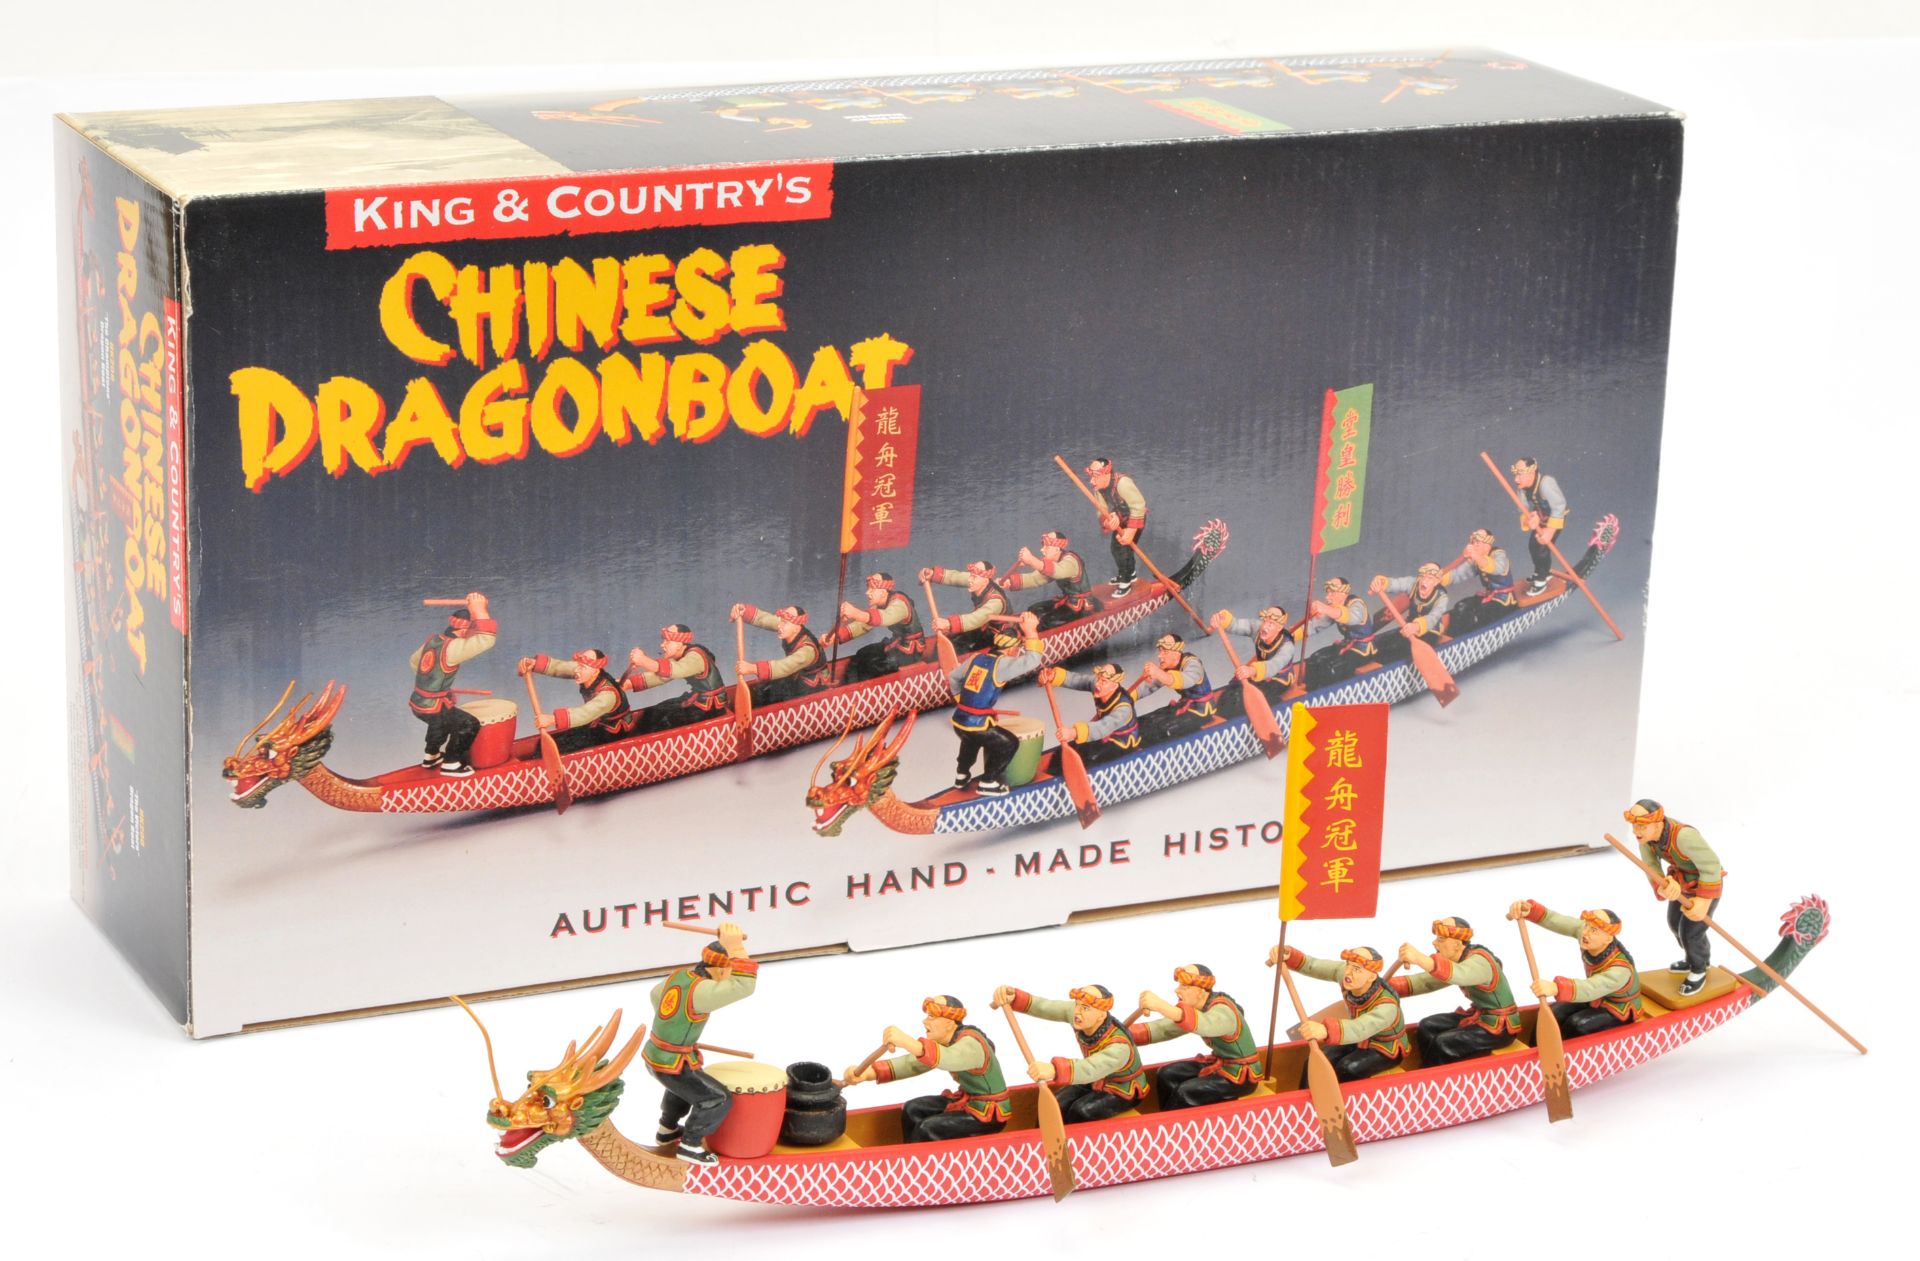 King & Country - Streets of old Hong Kong "The Champions" Dragon Boat Set HK209